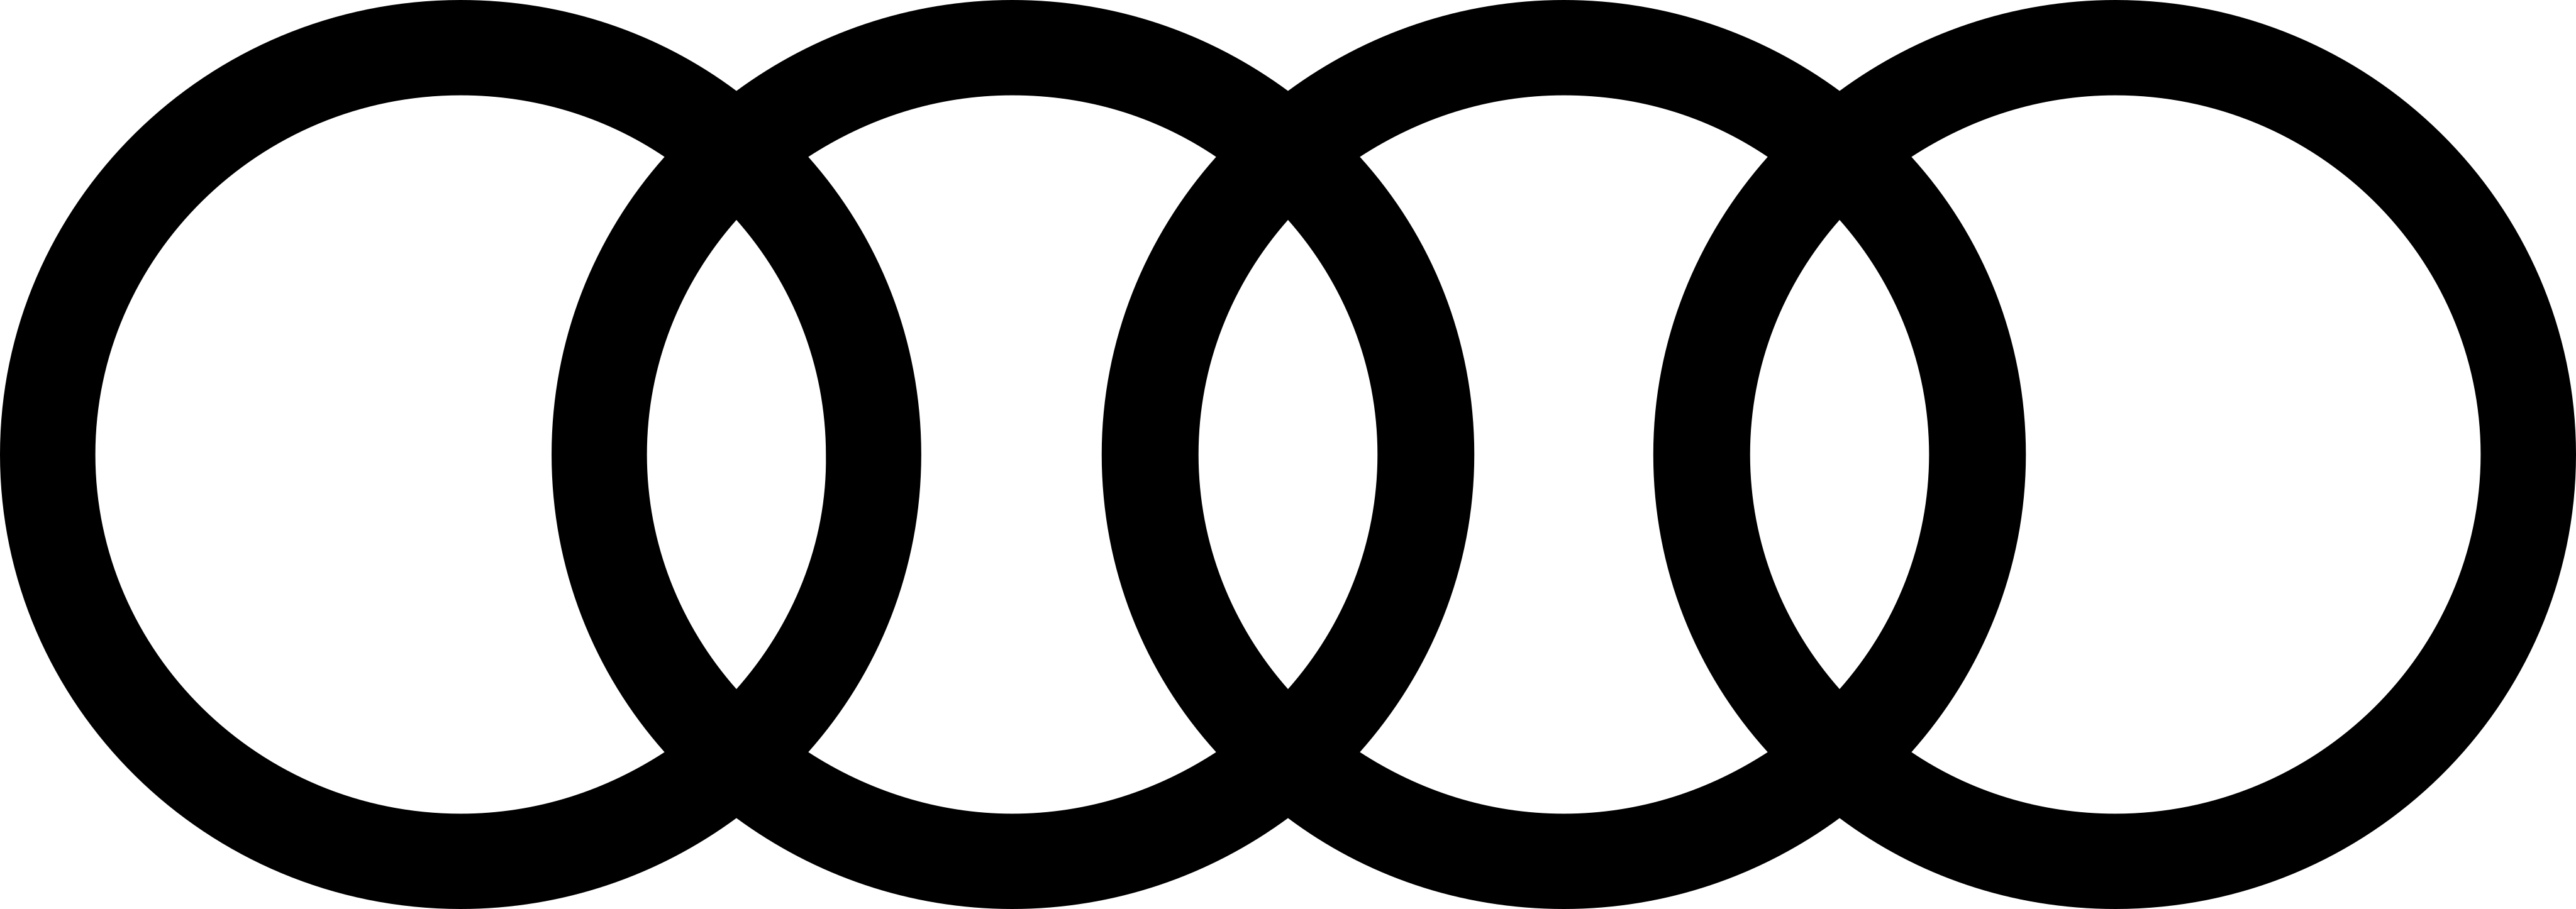 Audi Logo PNG Image HD